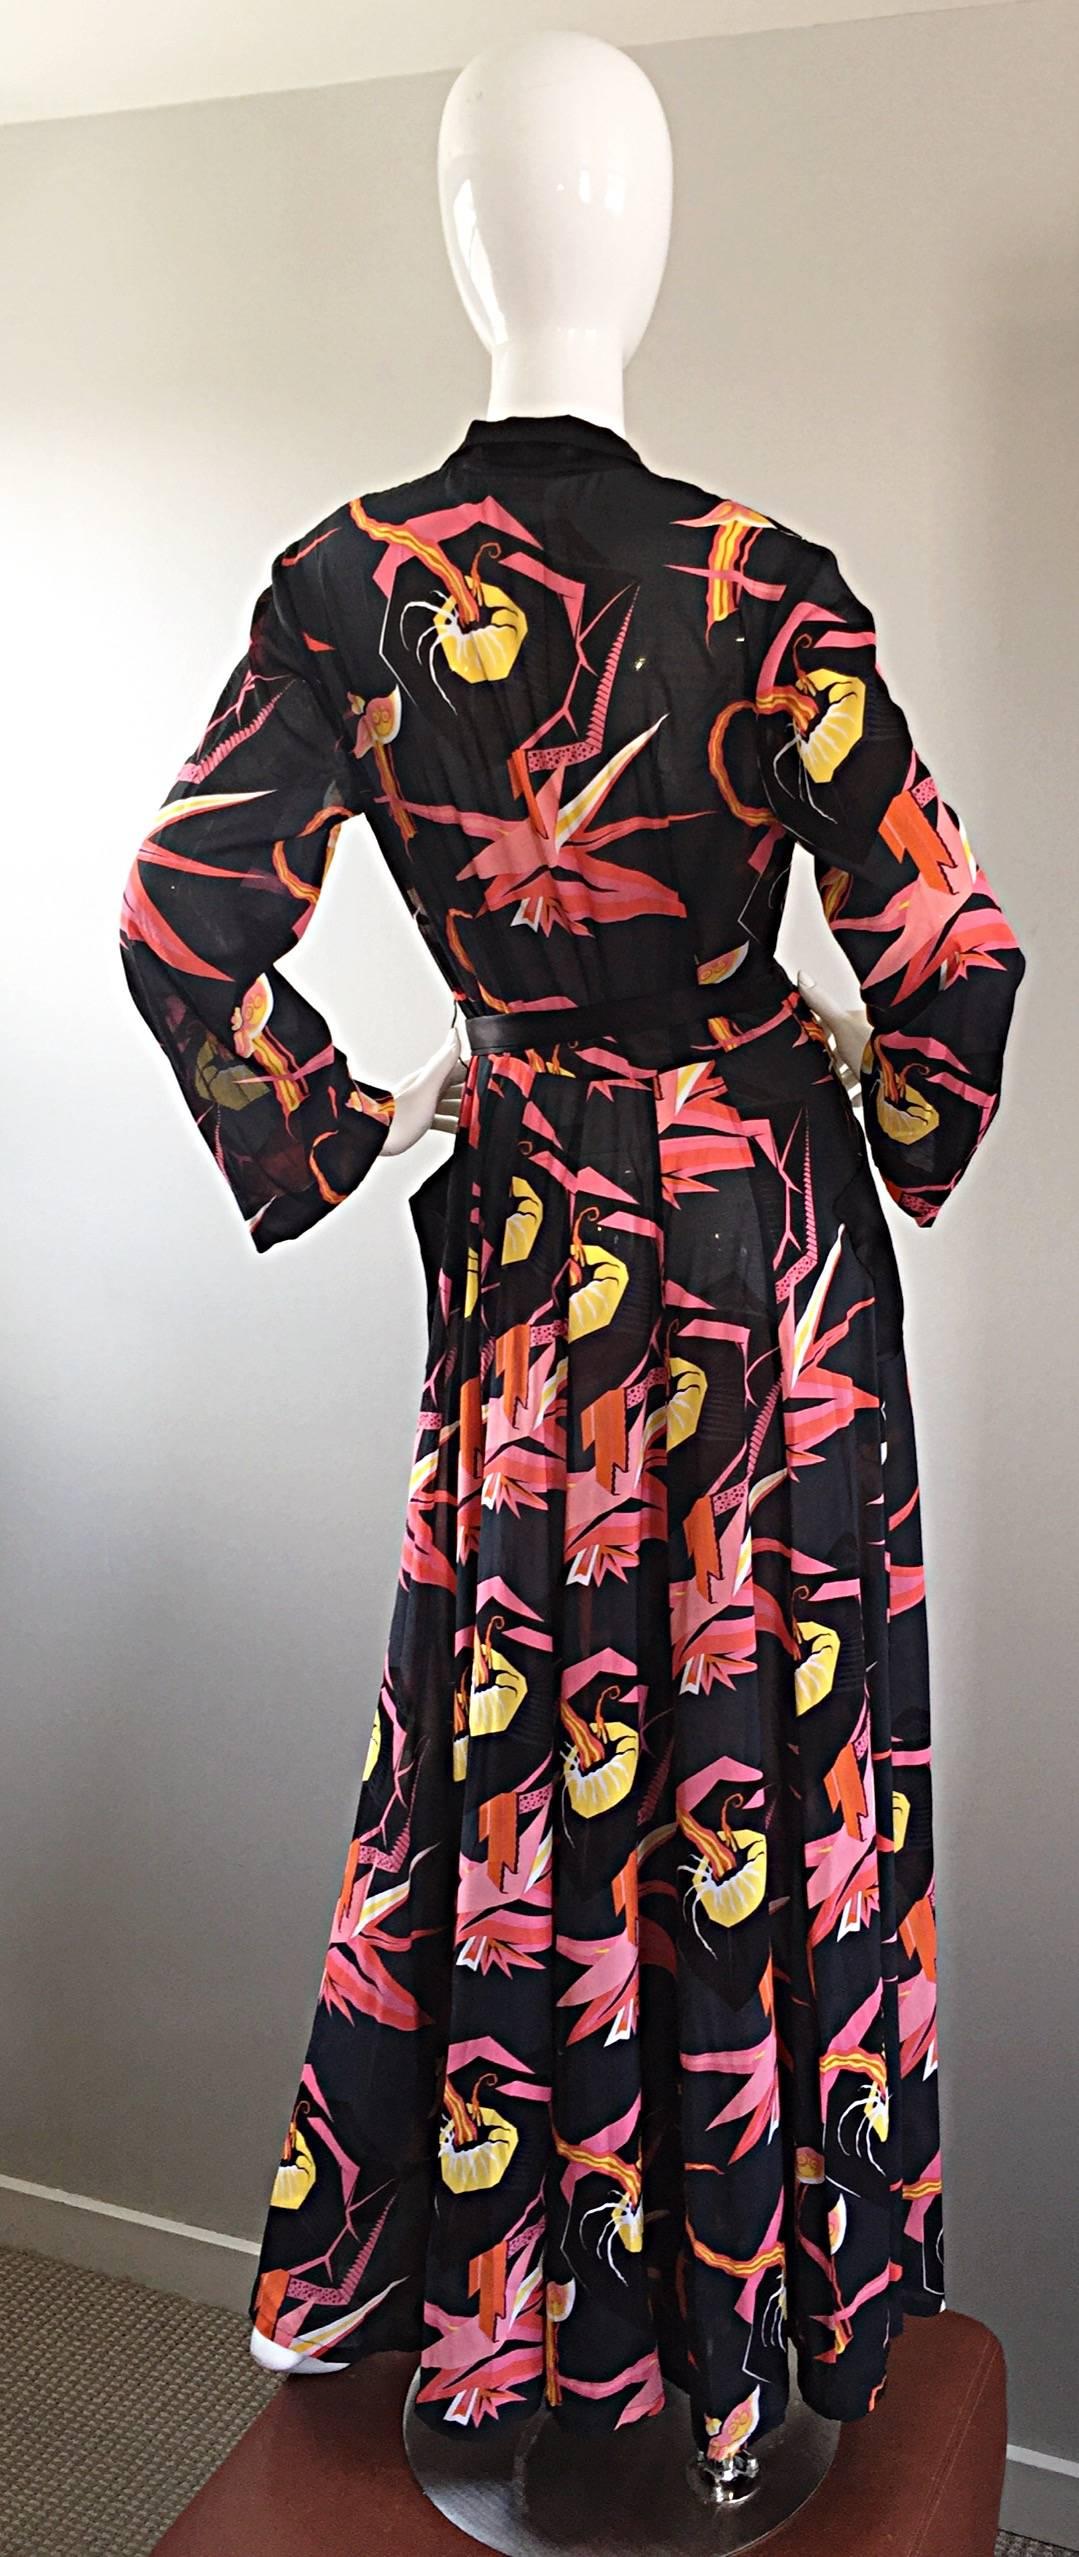 Agent Provocateur Black Japanese Style Dressing Gown Dress Silk Kimono Robe 1